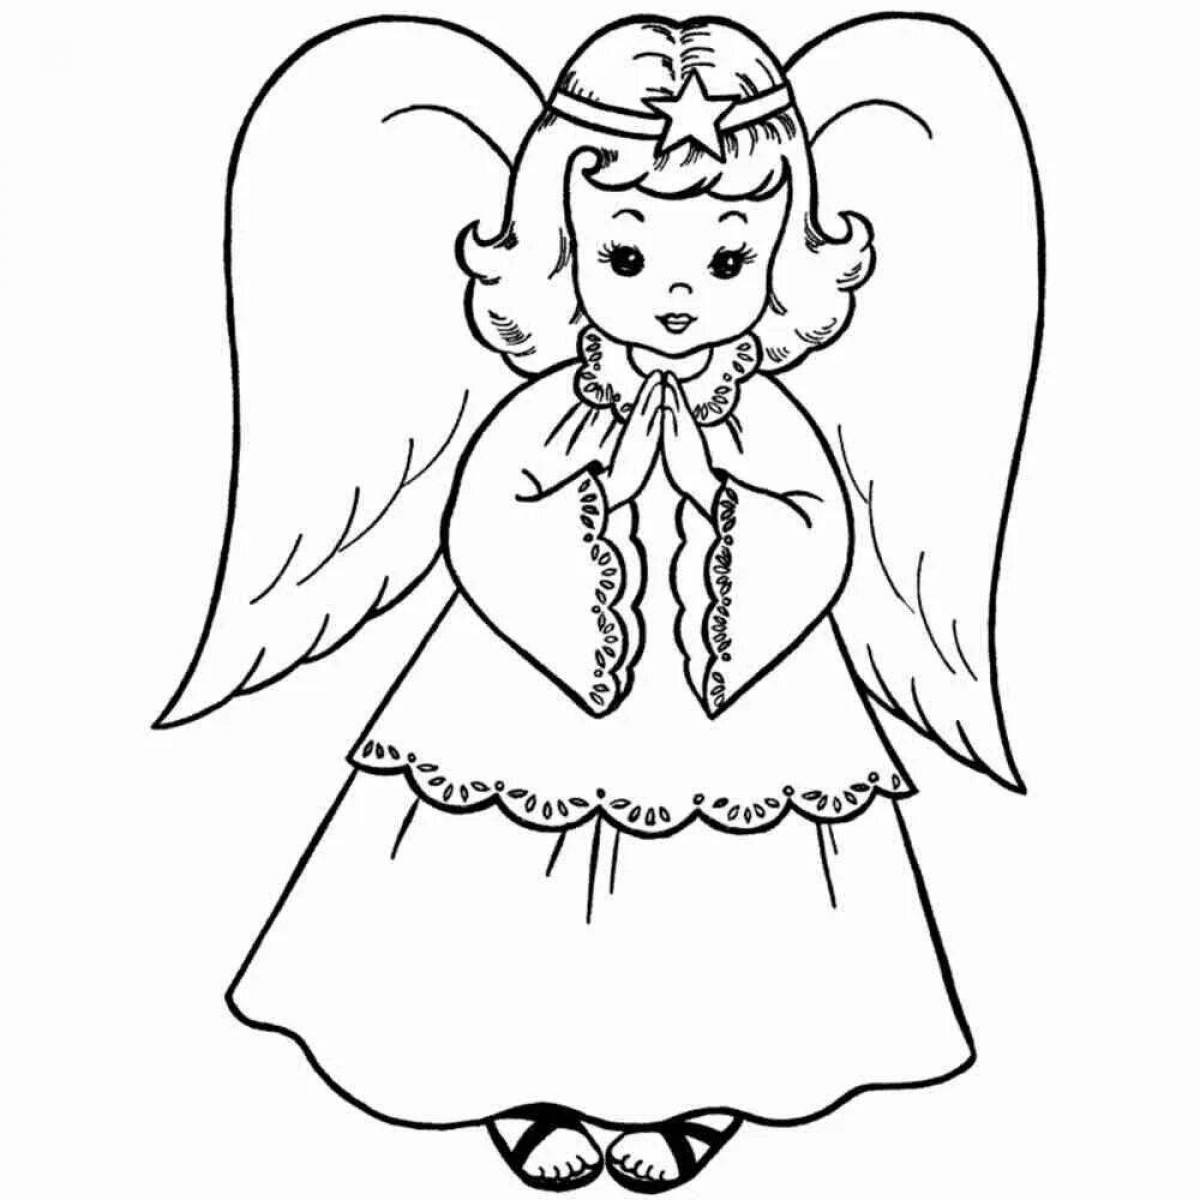 Animated christmas angel coloring page